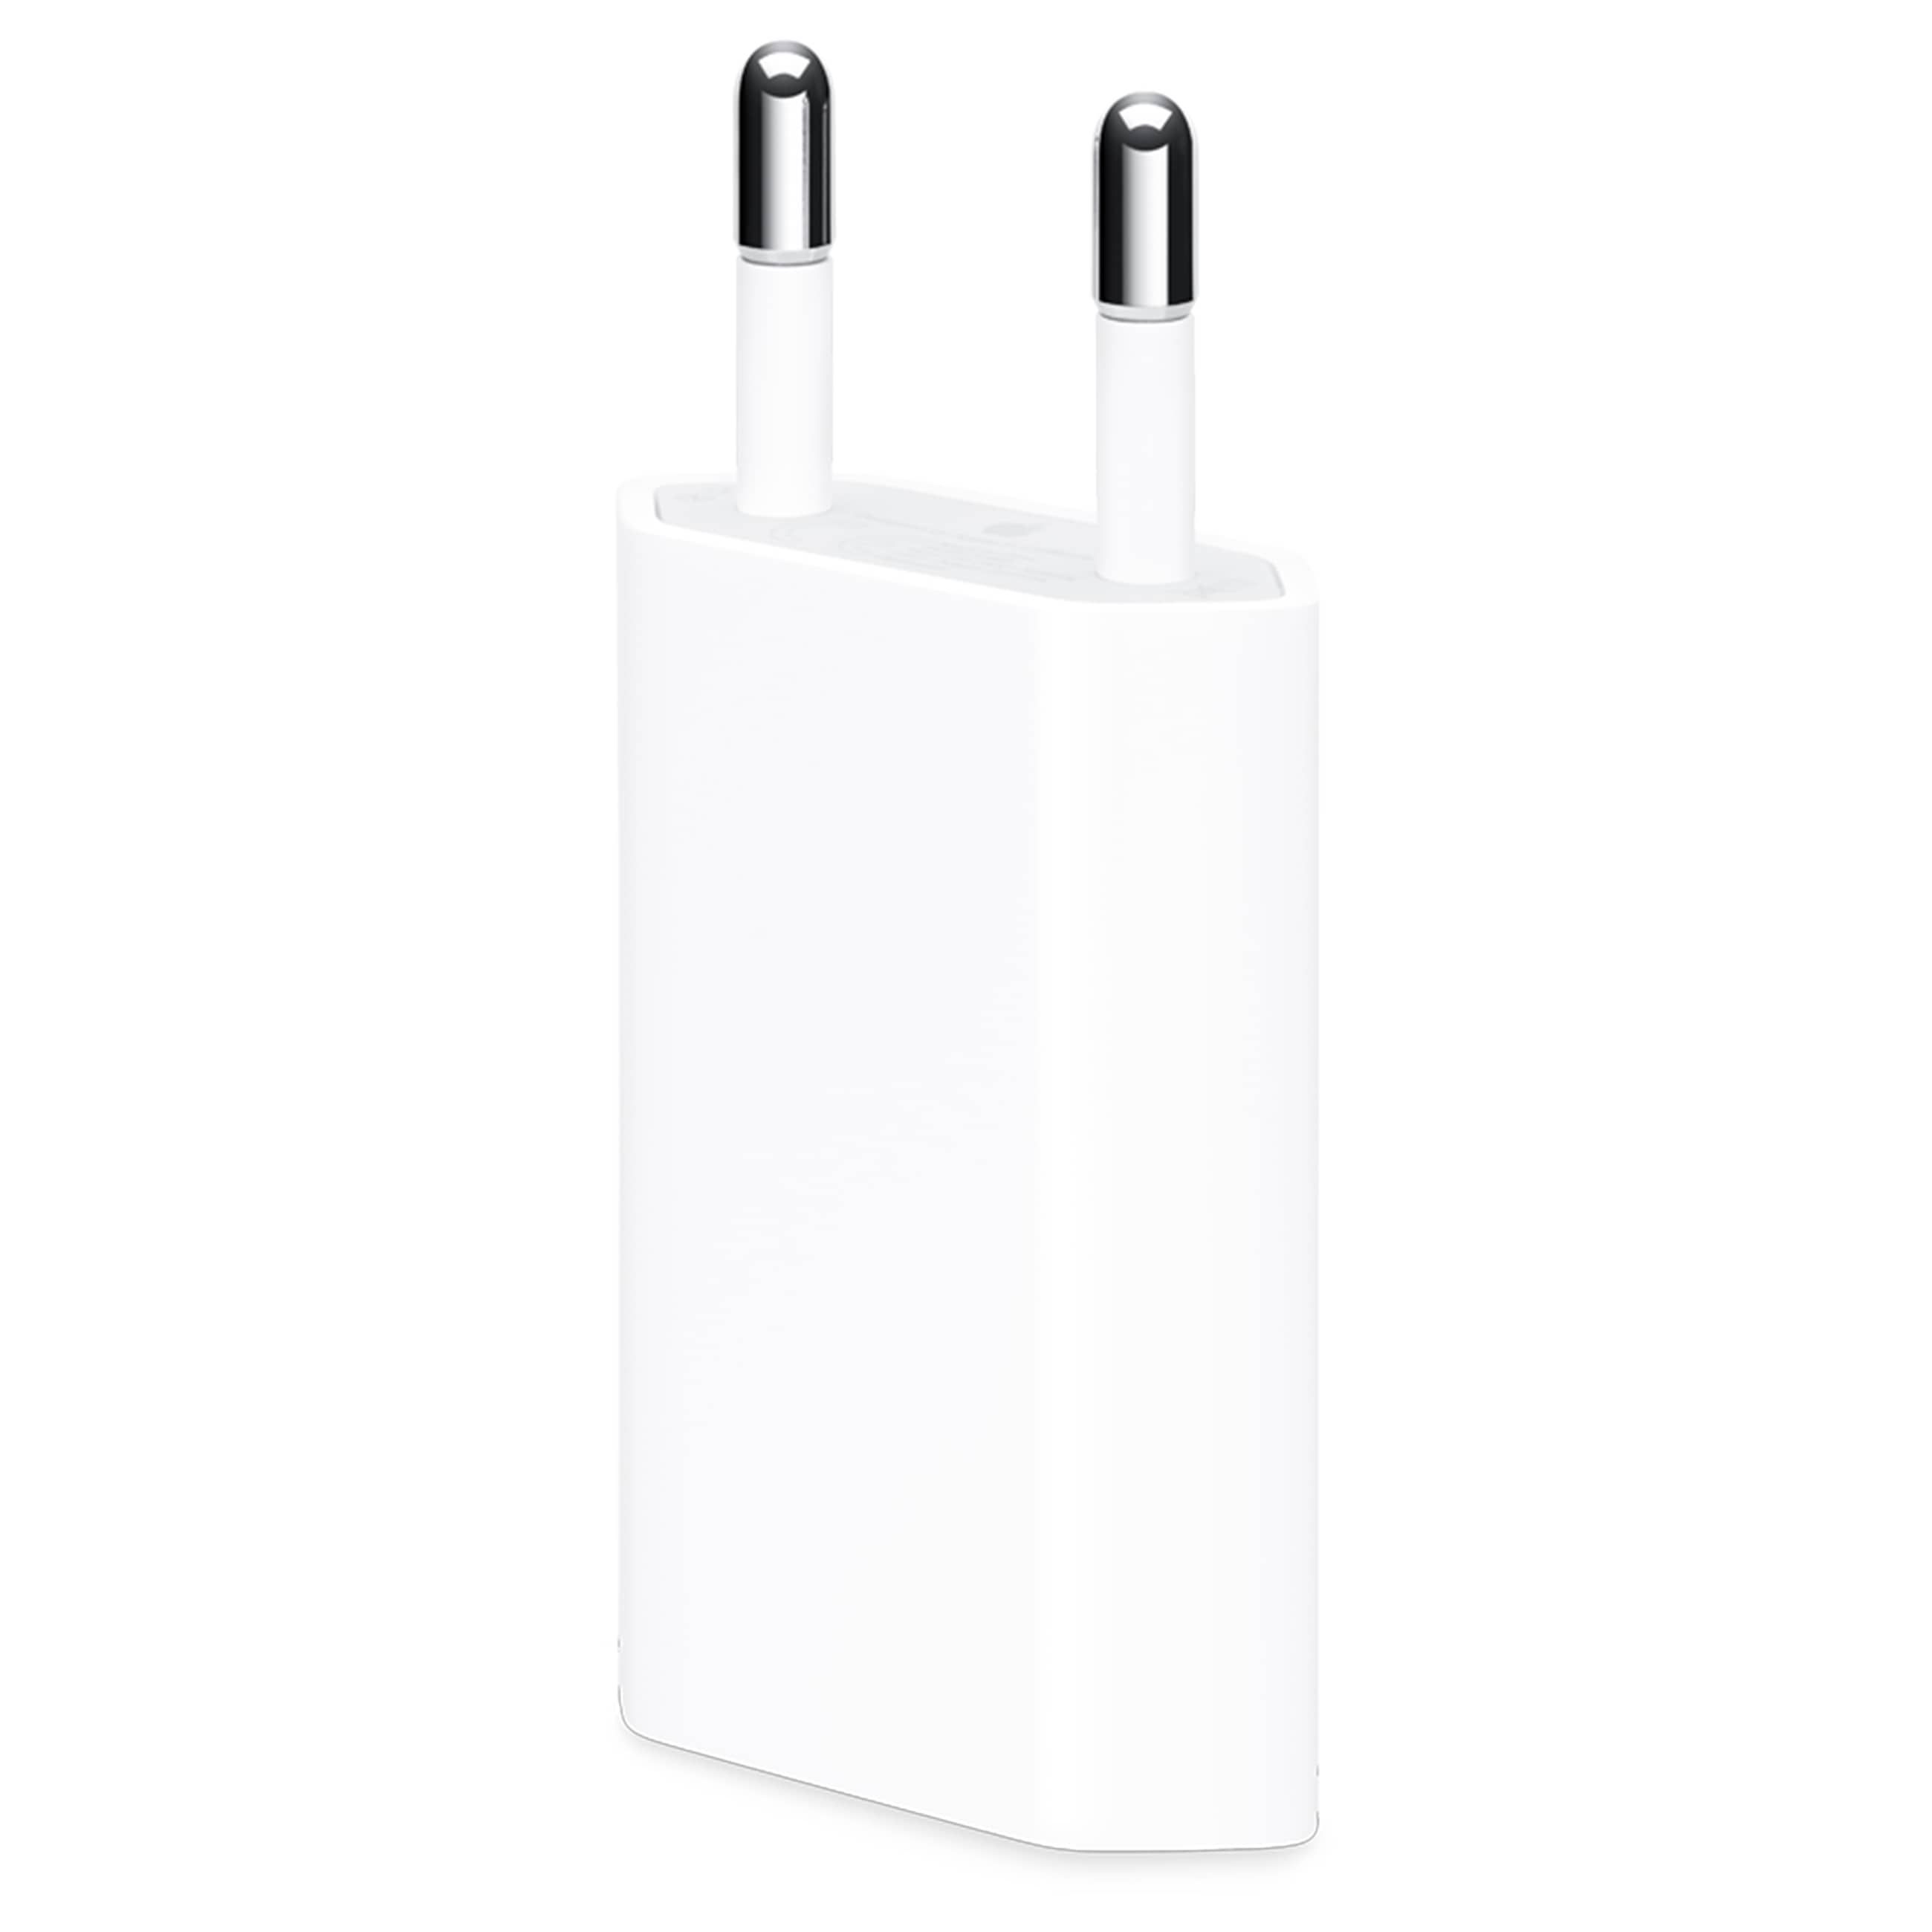 Apple USB Power Adapter - Ladegerät - Weiß - Neu